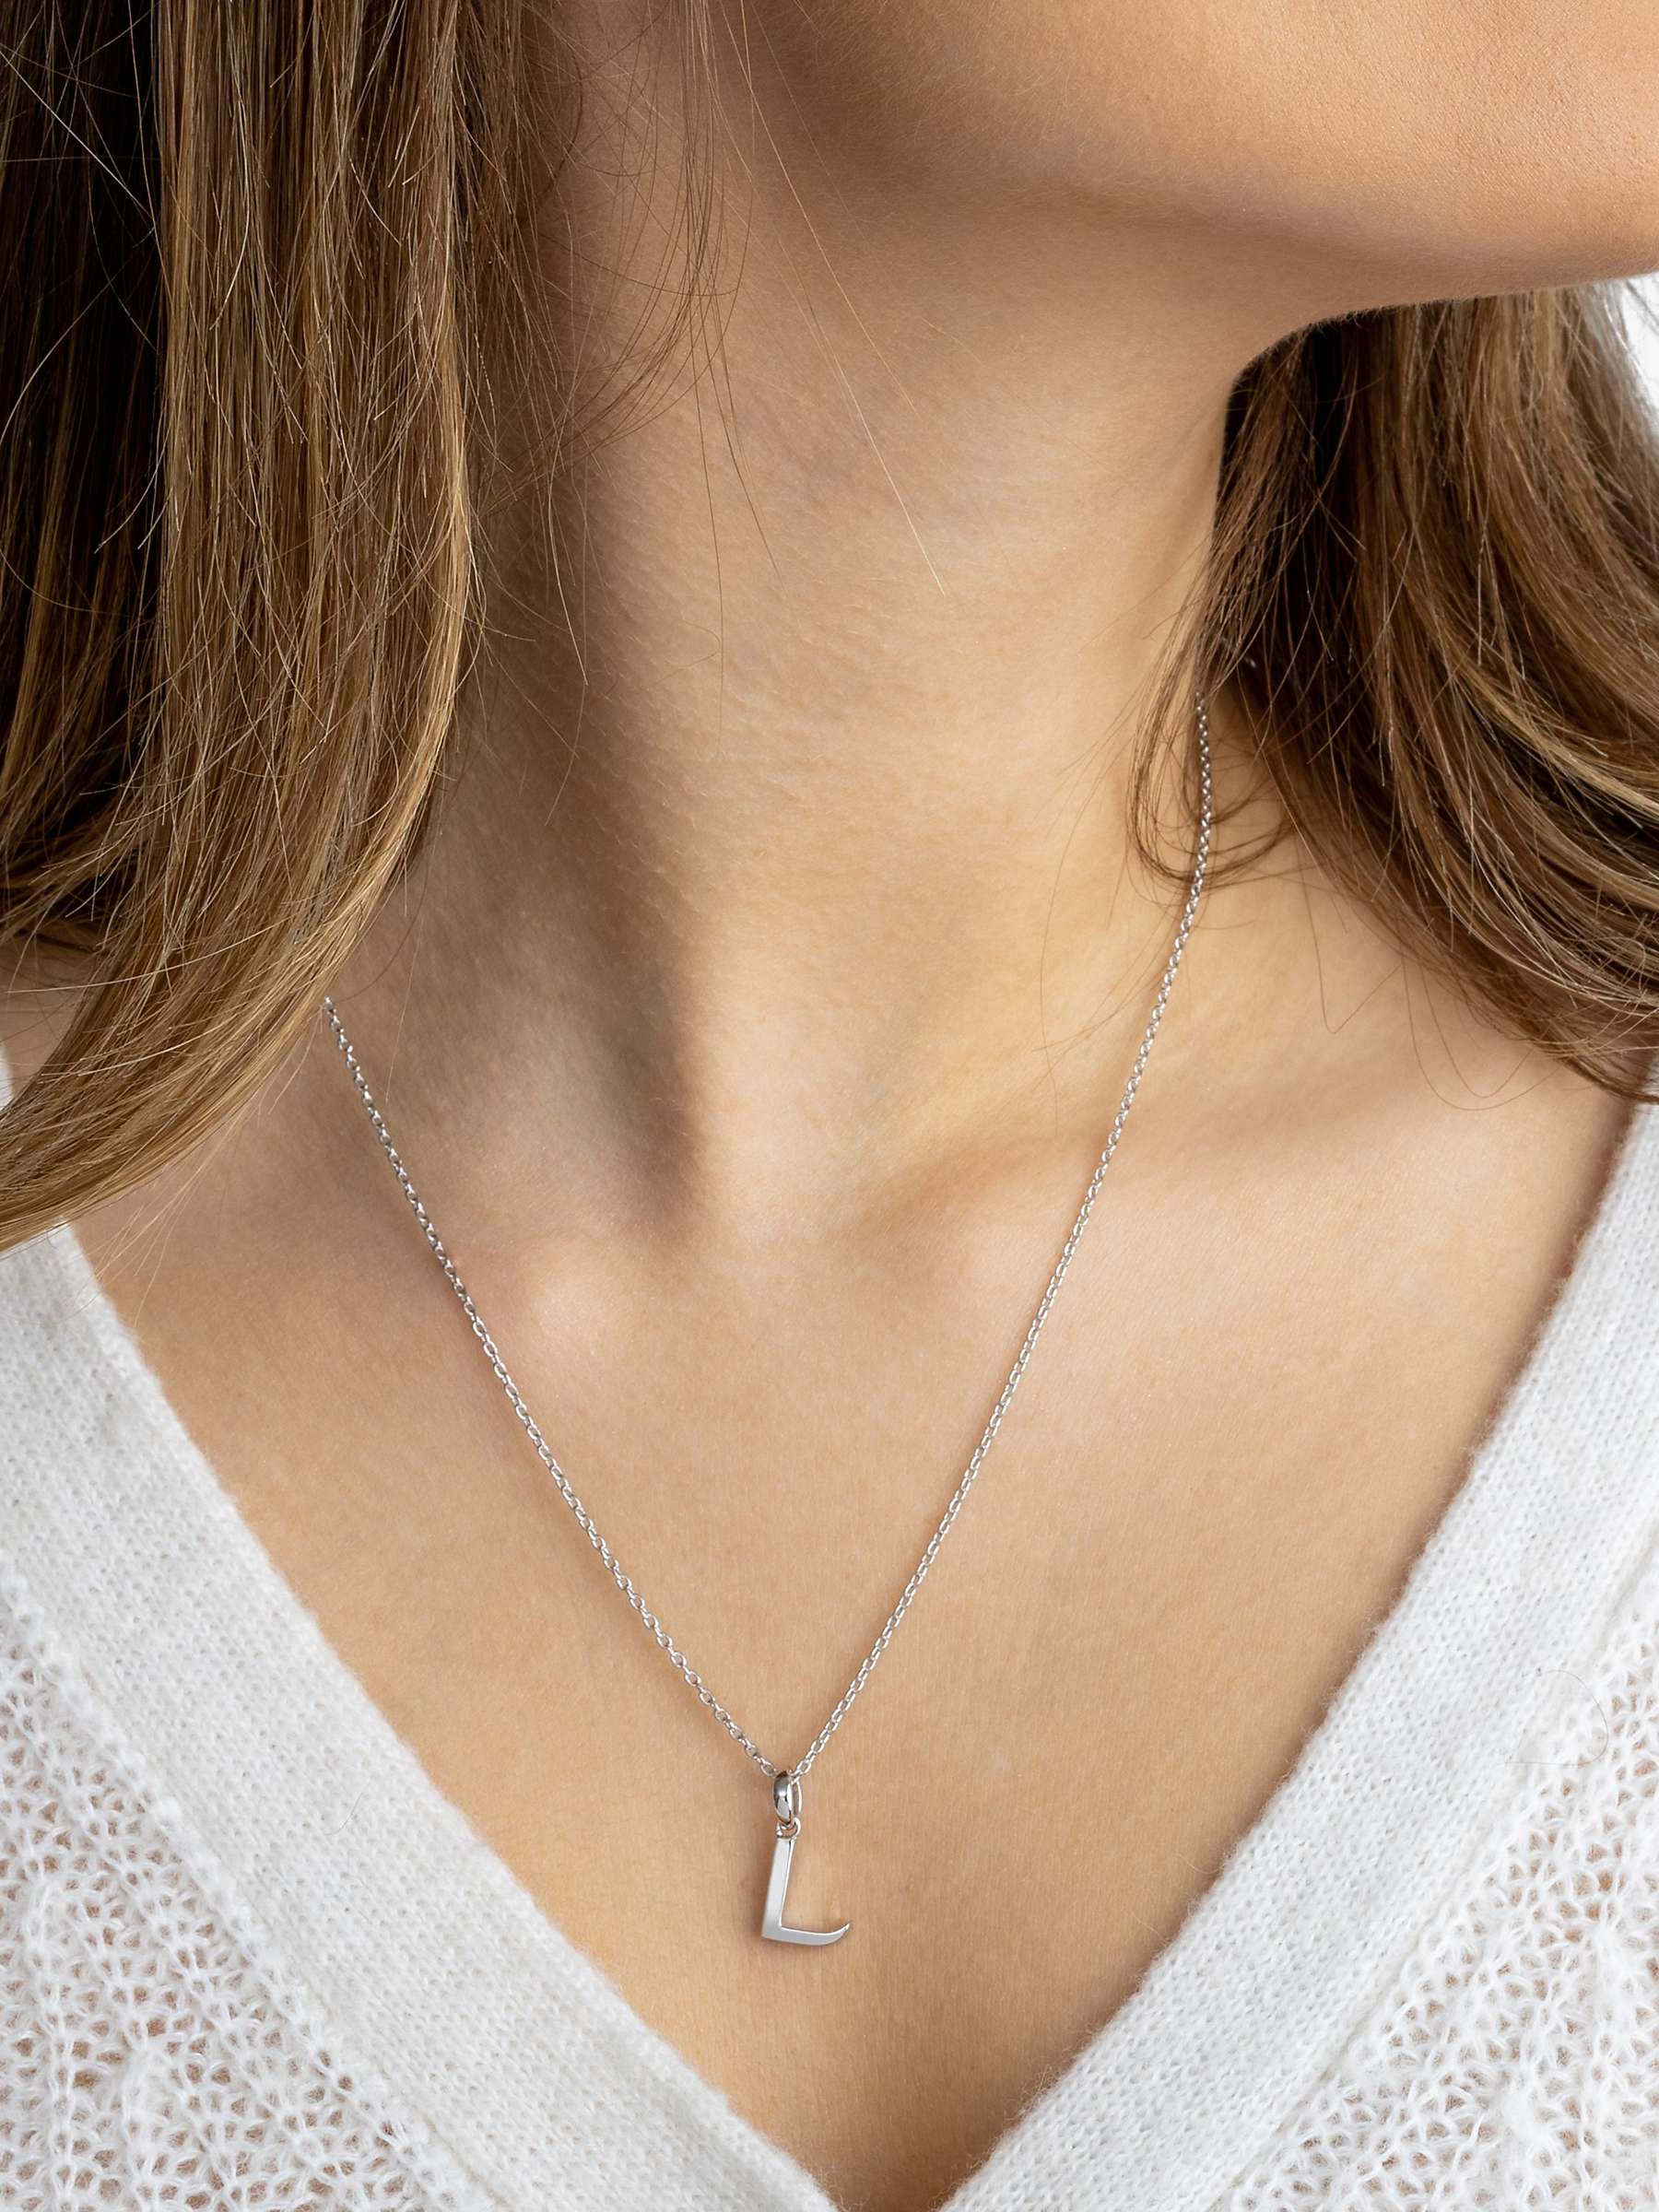 Buy Kit Heath Skript Collection Signature Initial Pendant Necklace, Silver Online at johnlewis.com